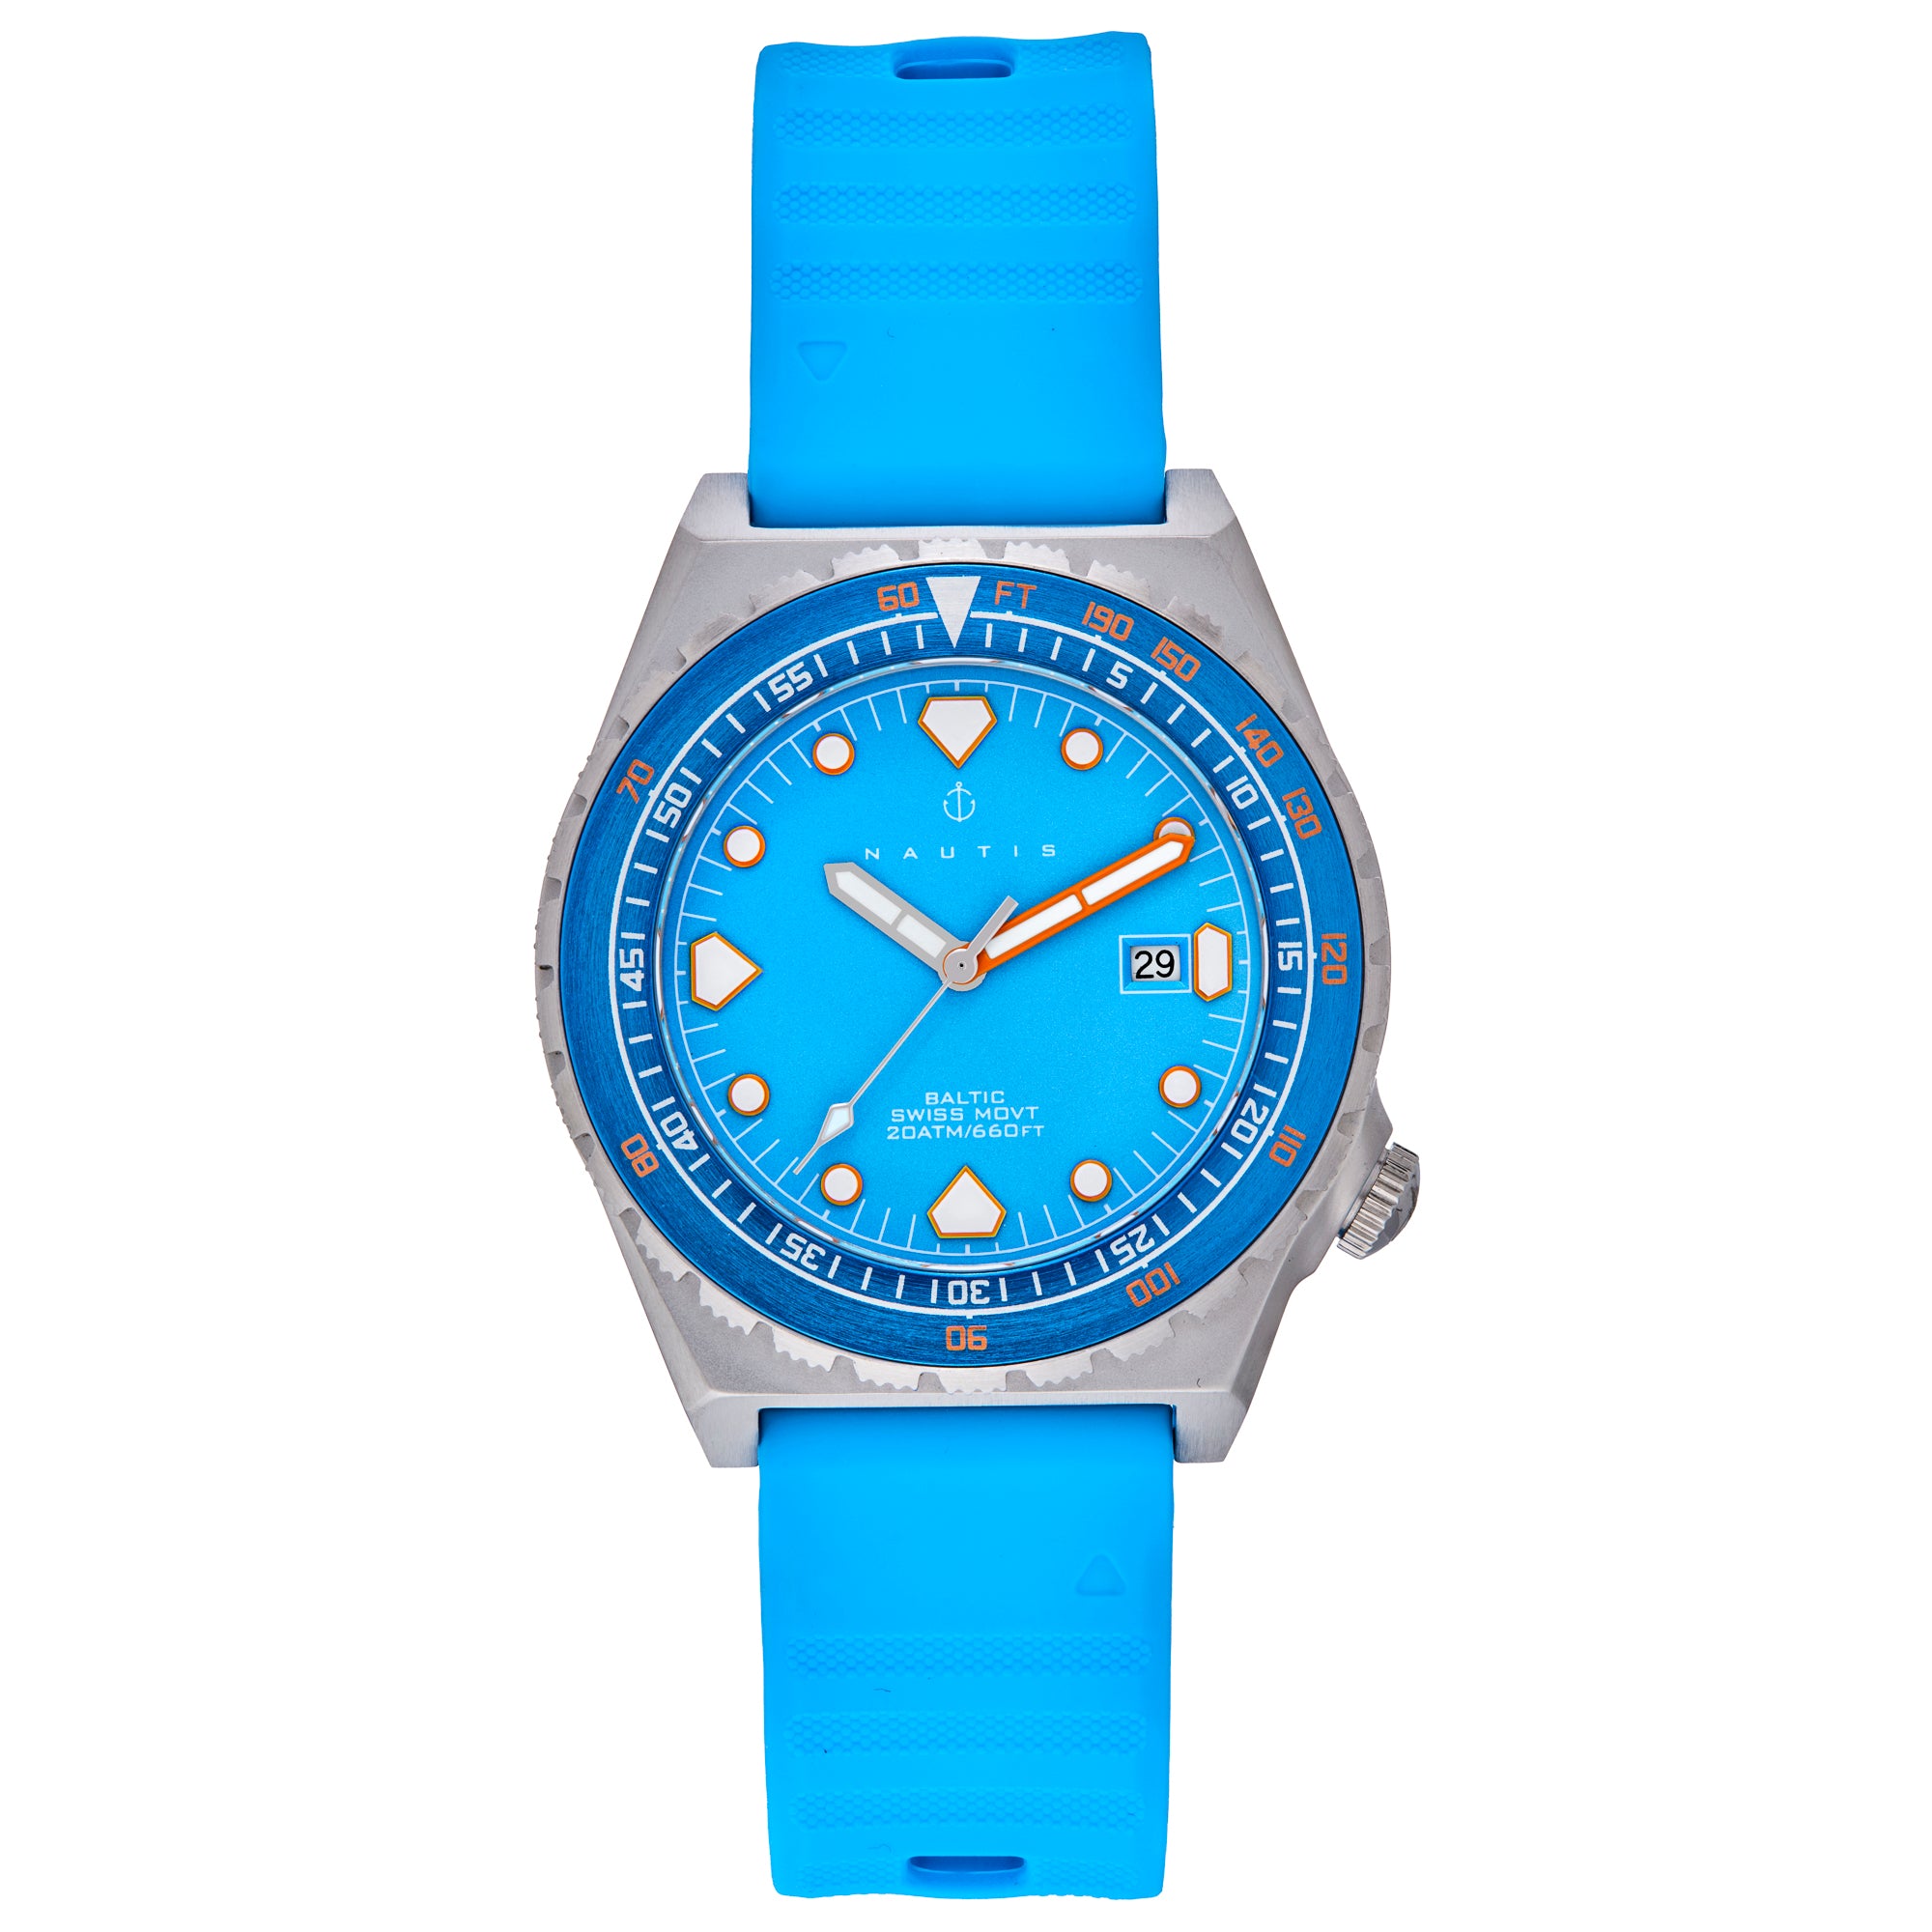 Nautis Baltic Strap Watch w/Date - Blue - NAUN104-4